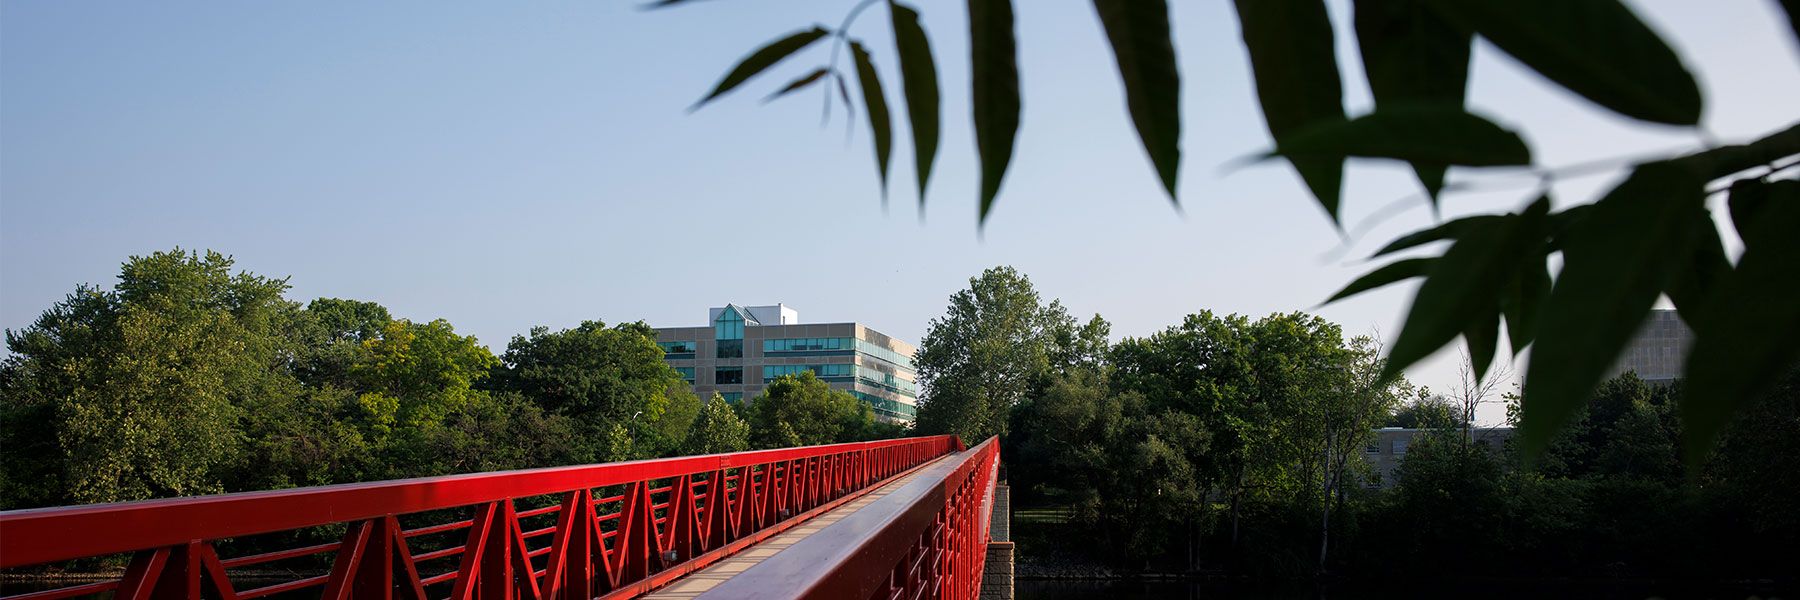 Scenic photo of a red bridge over the water at IU Kokomo.